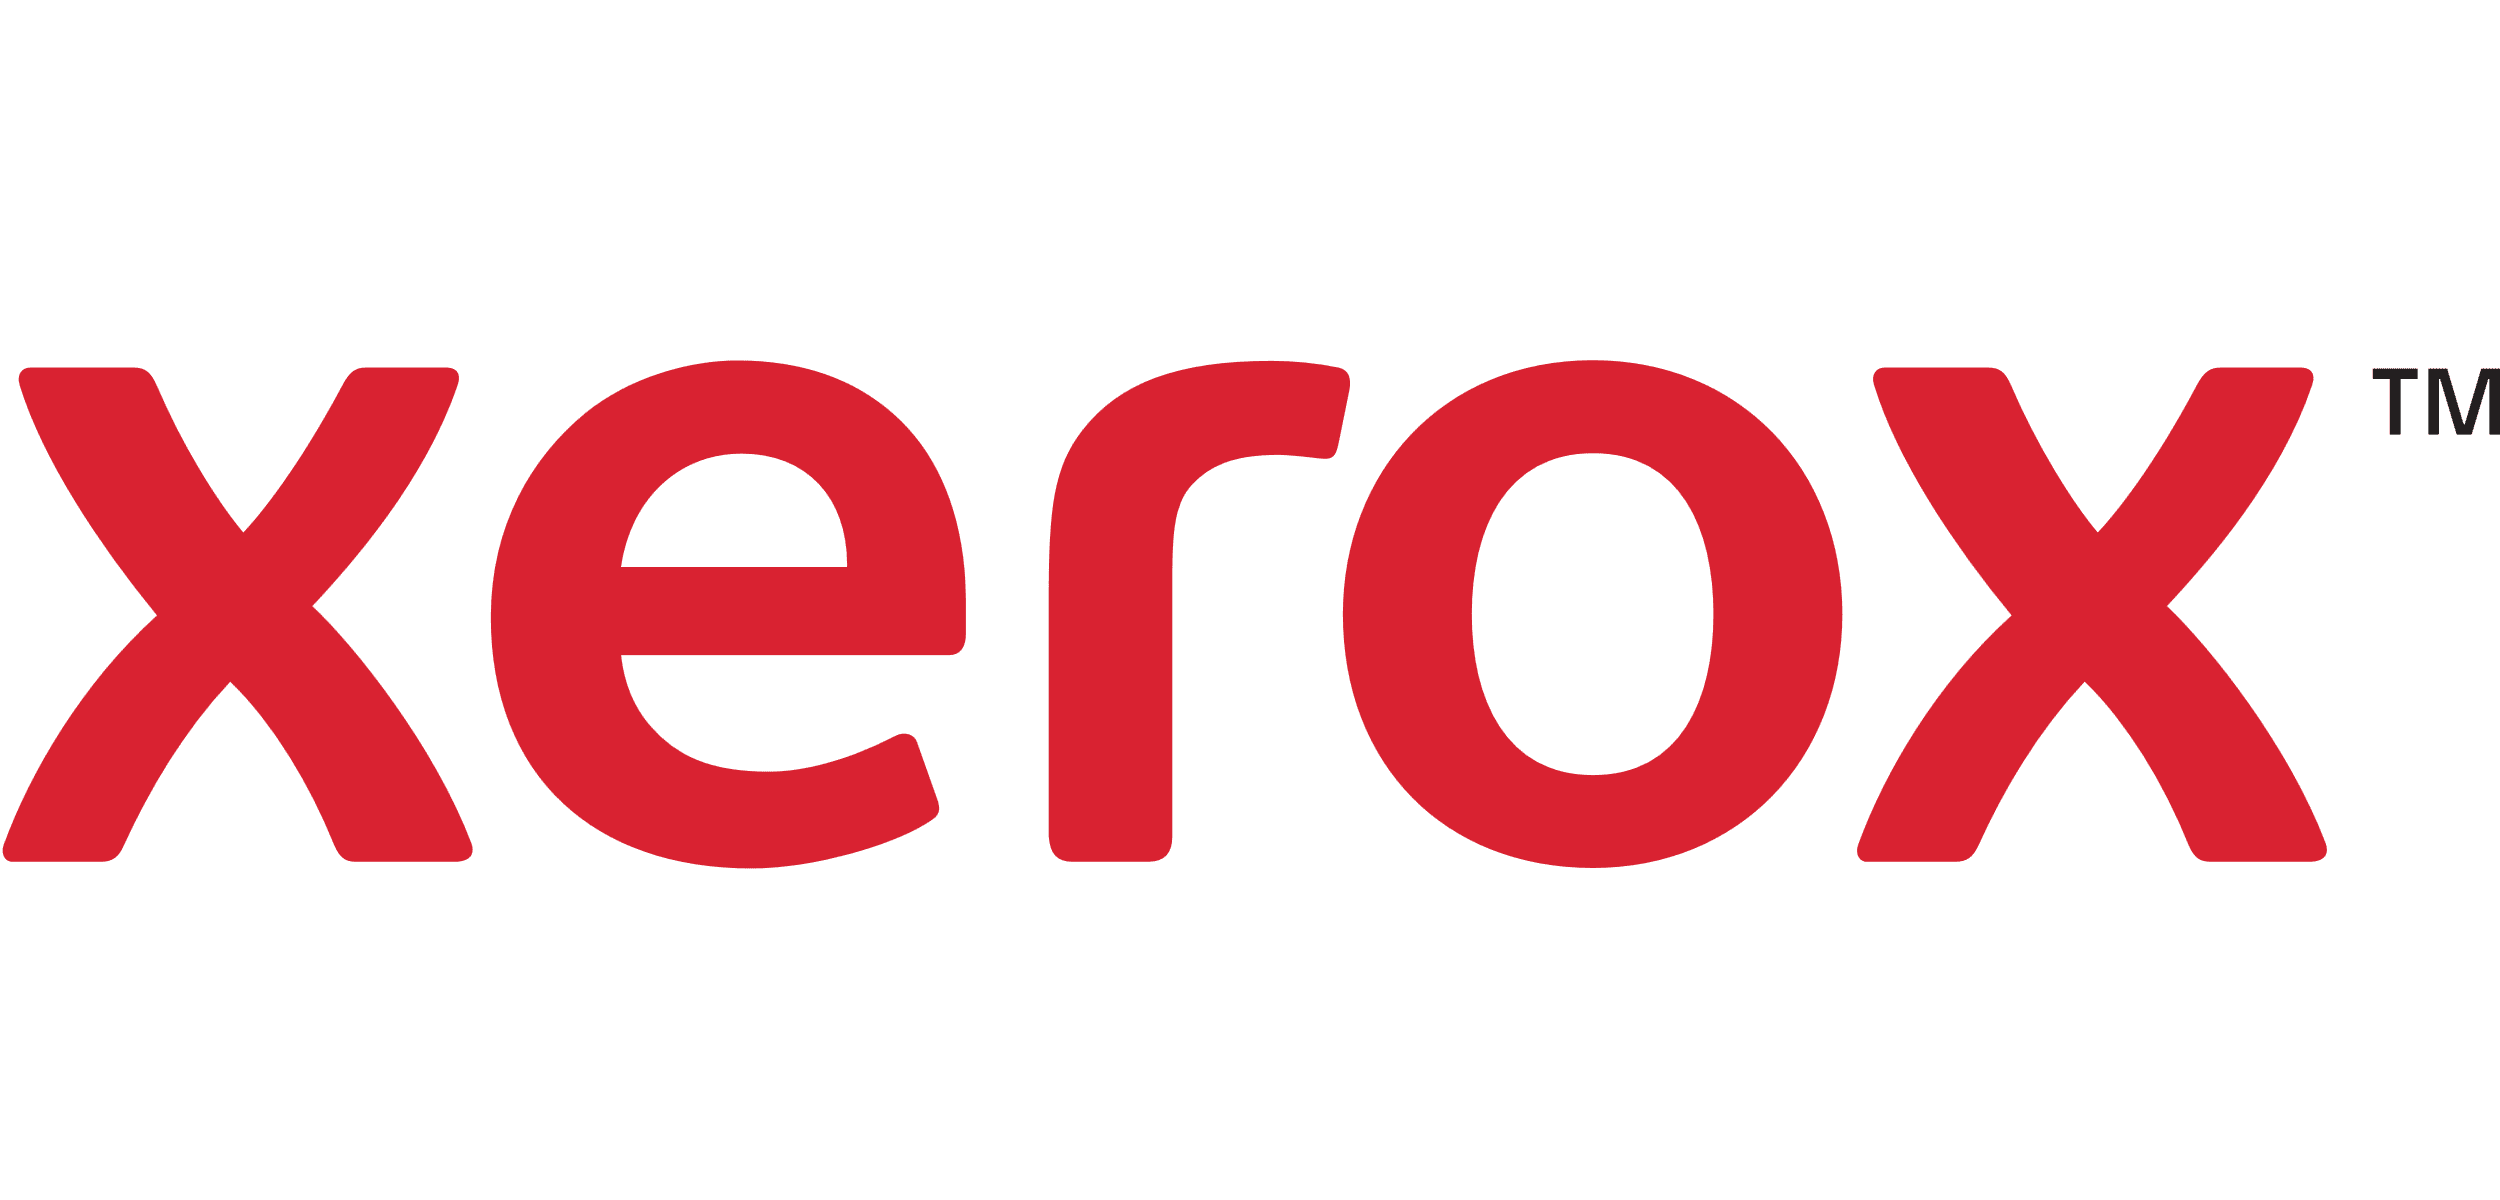 Xerox Logo - símbolo, significado logotipo, historia, PNG